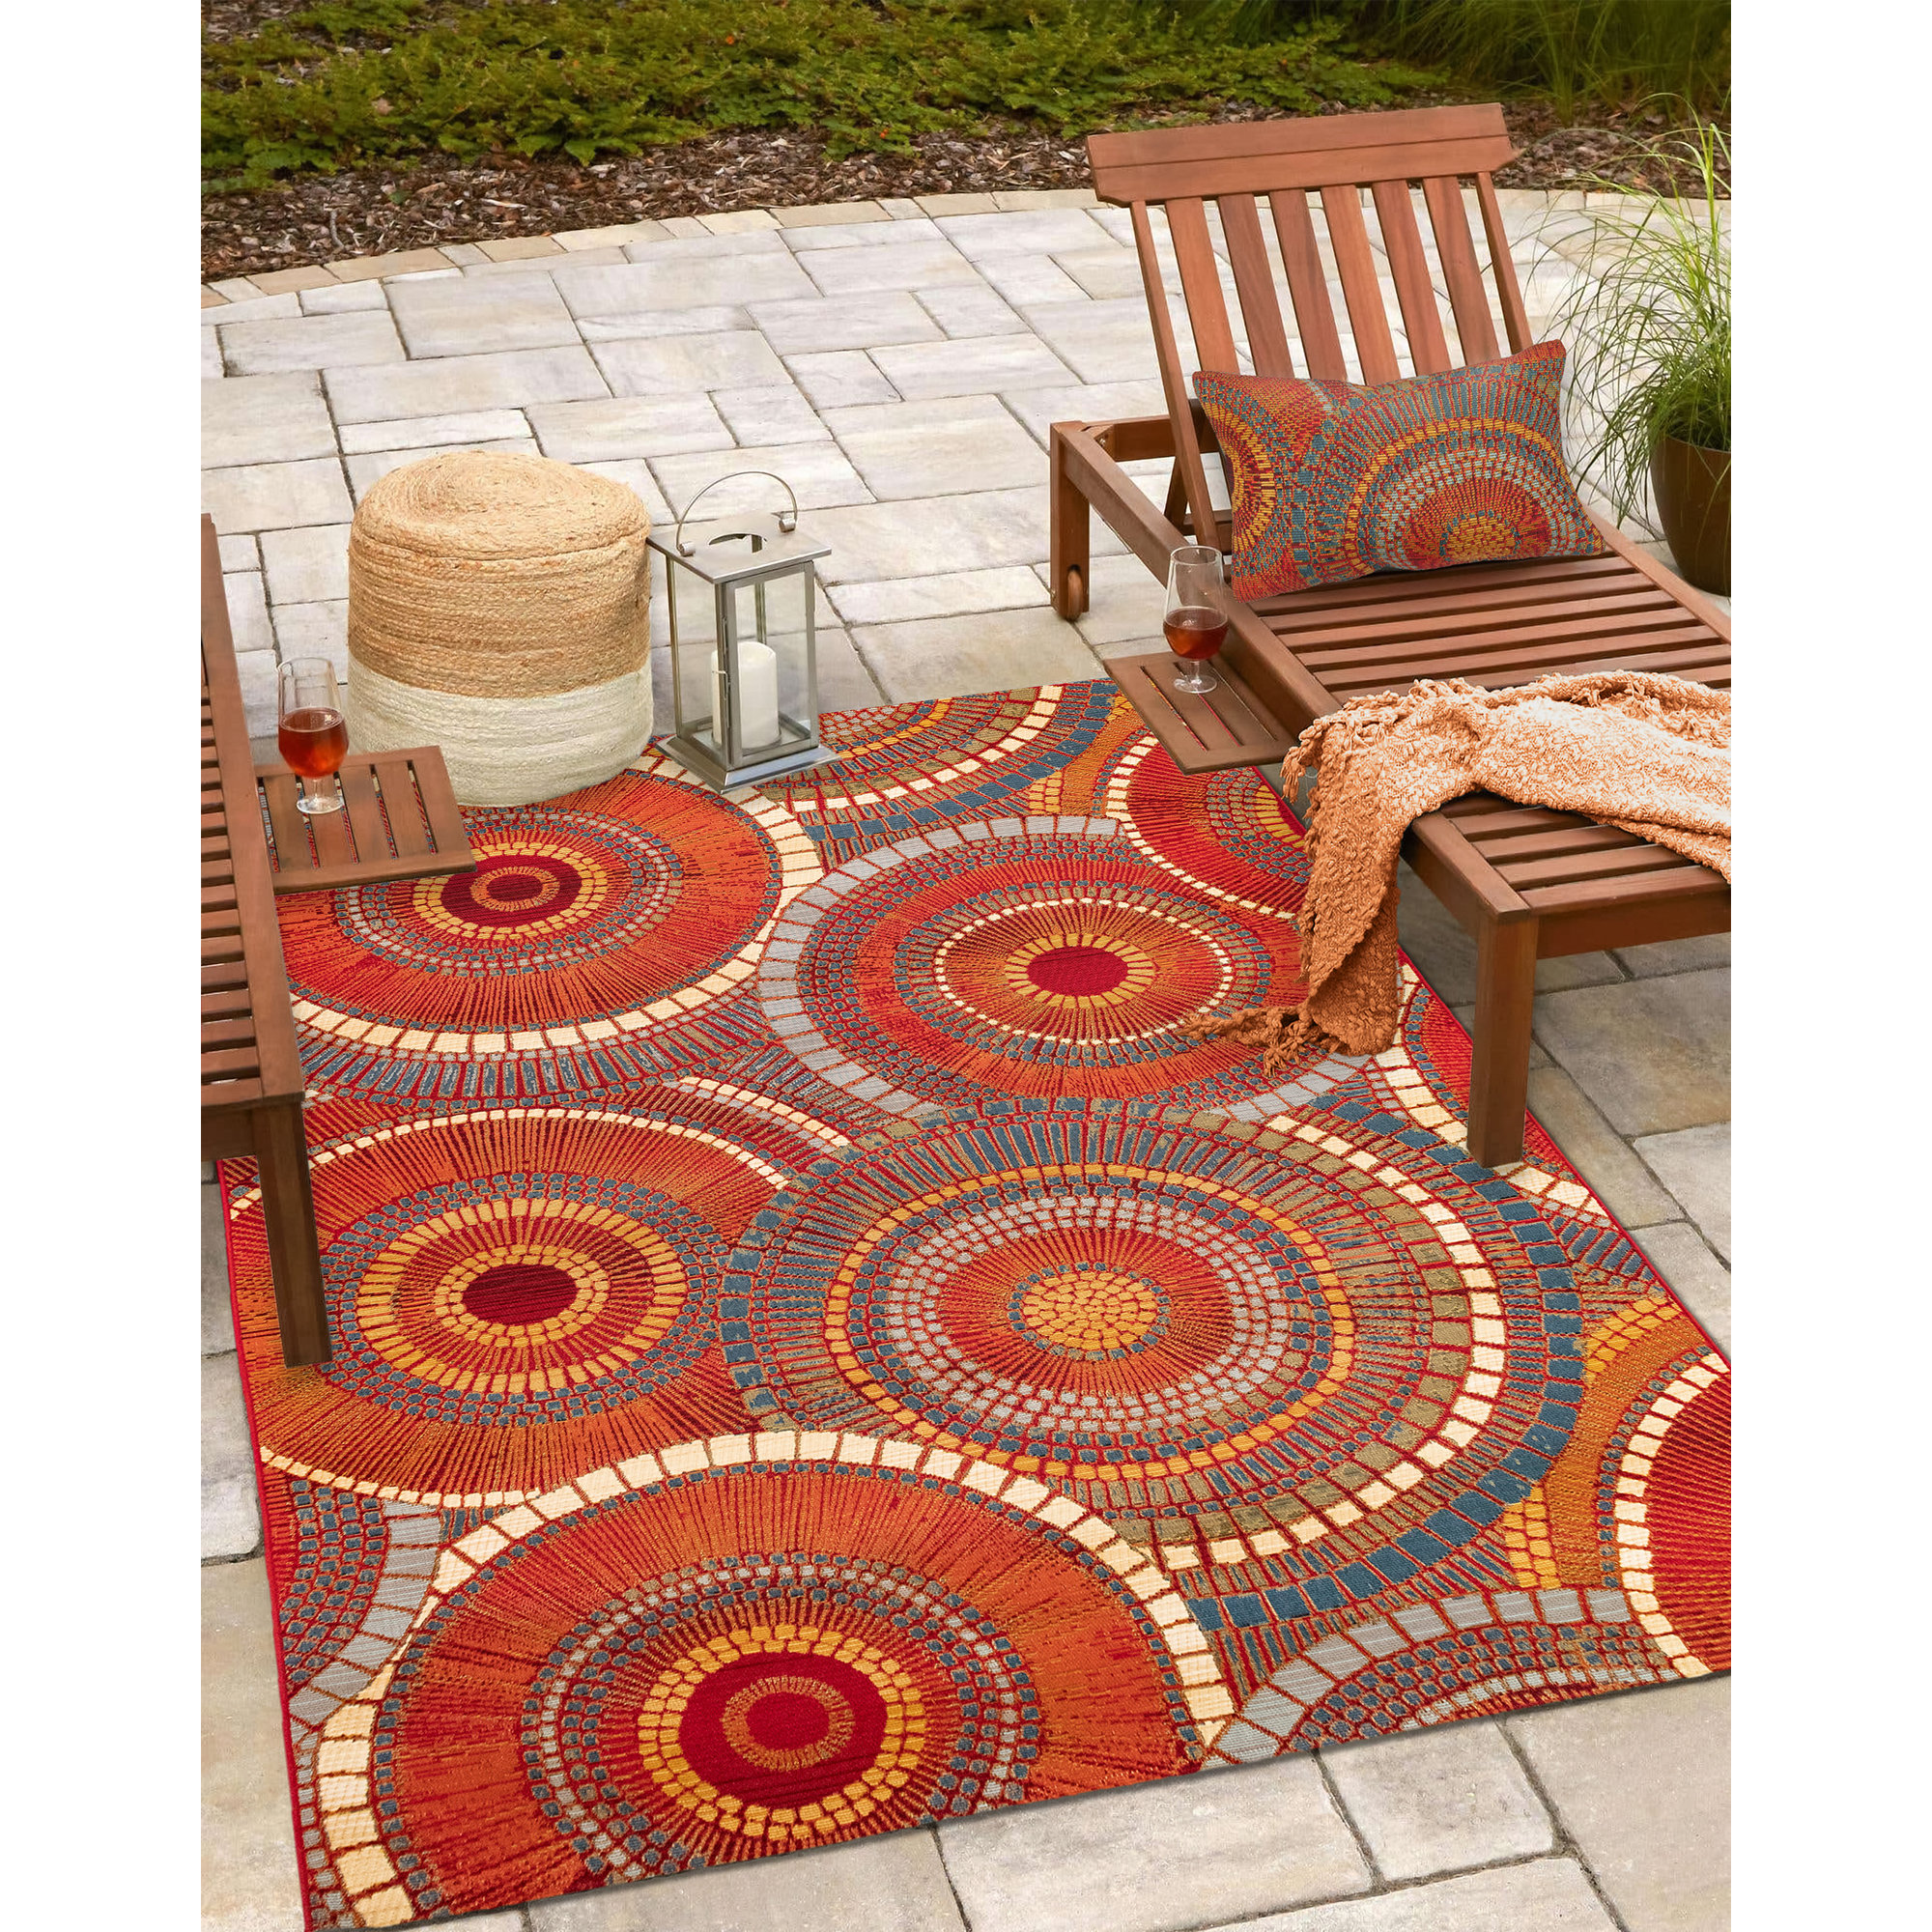 World Famous Indoor/Outdoor Rug, Camping RV Patio Floor Mat, Poly  Propylene, 72 x 106 Inches